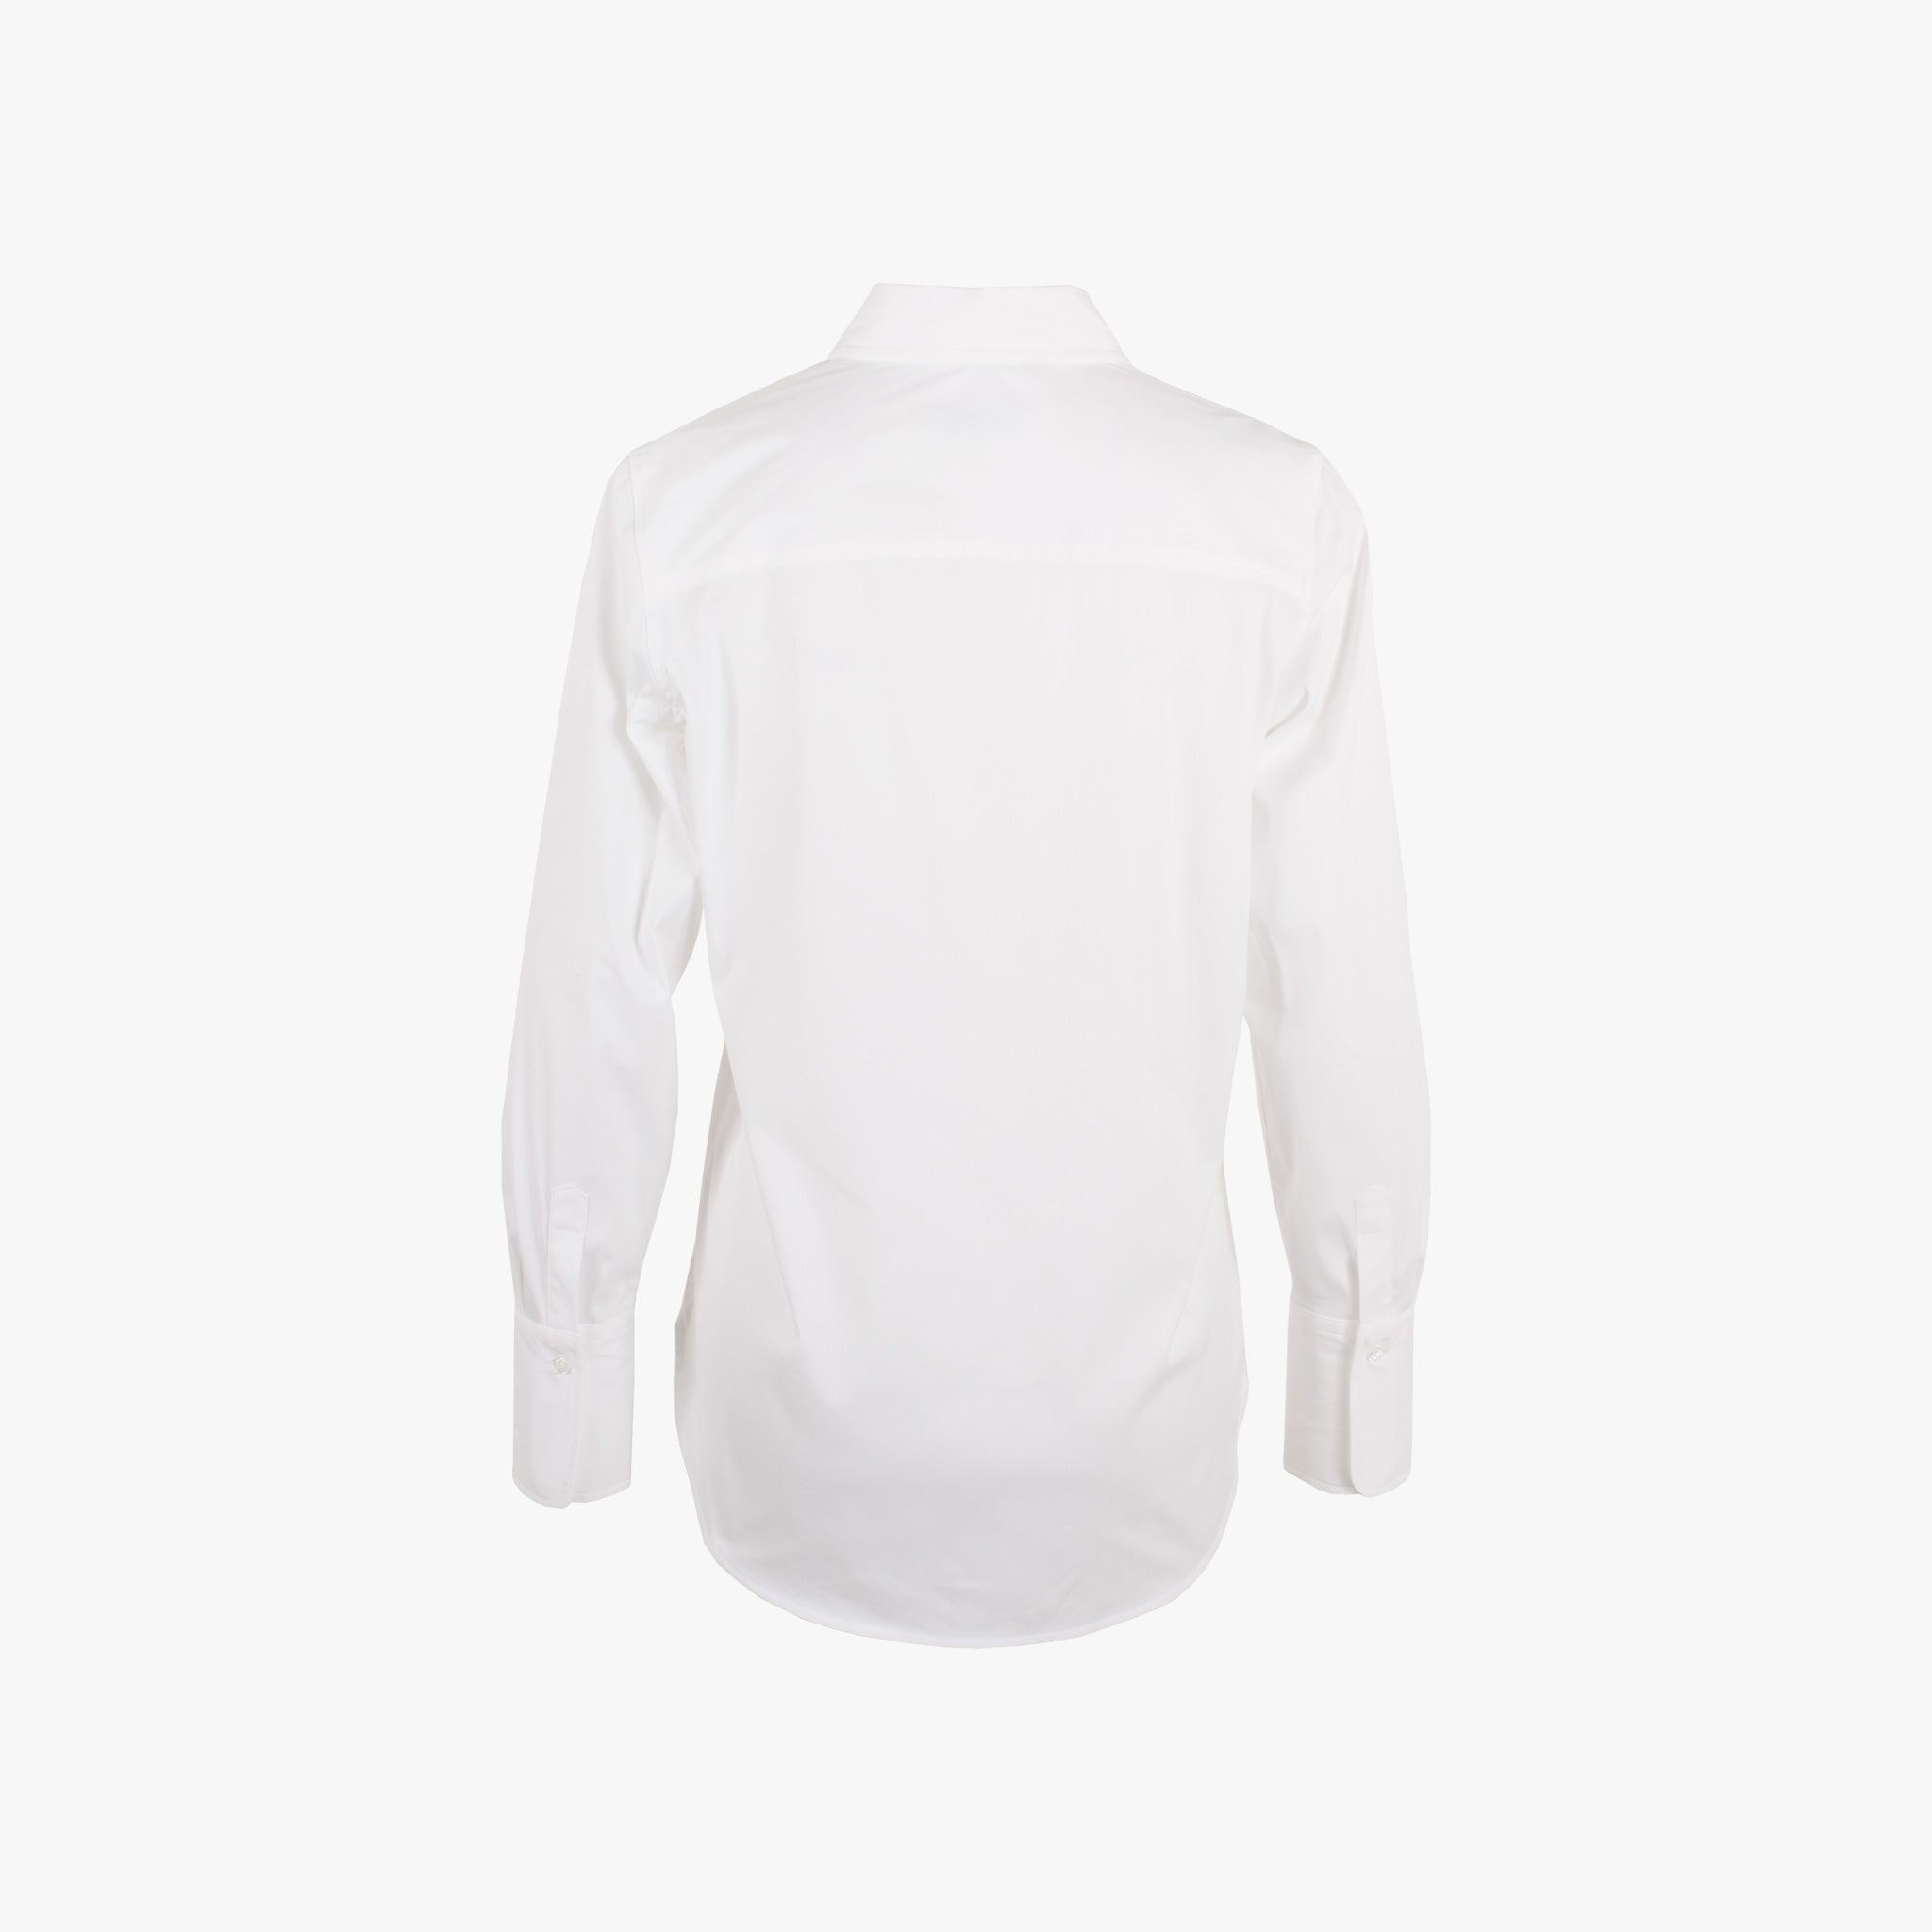 The White Shirt, Bluse Fashion Basic, Rückenansicht | weiß